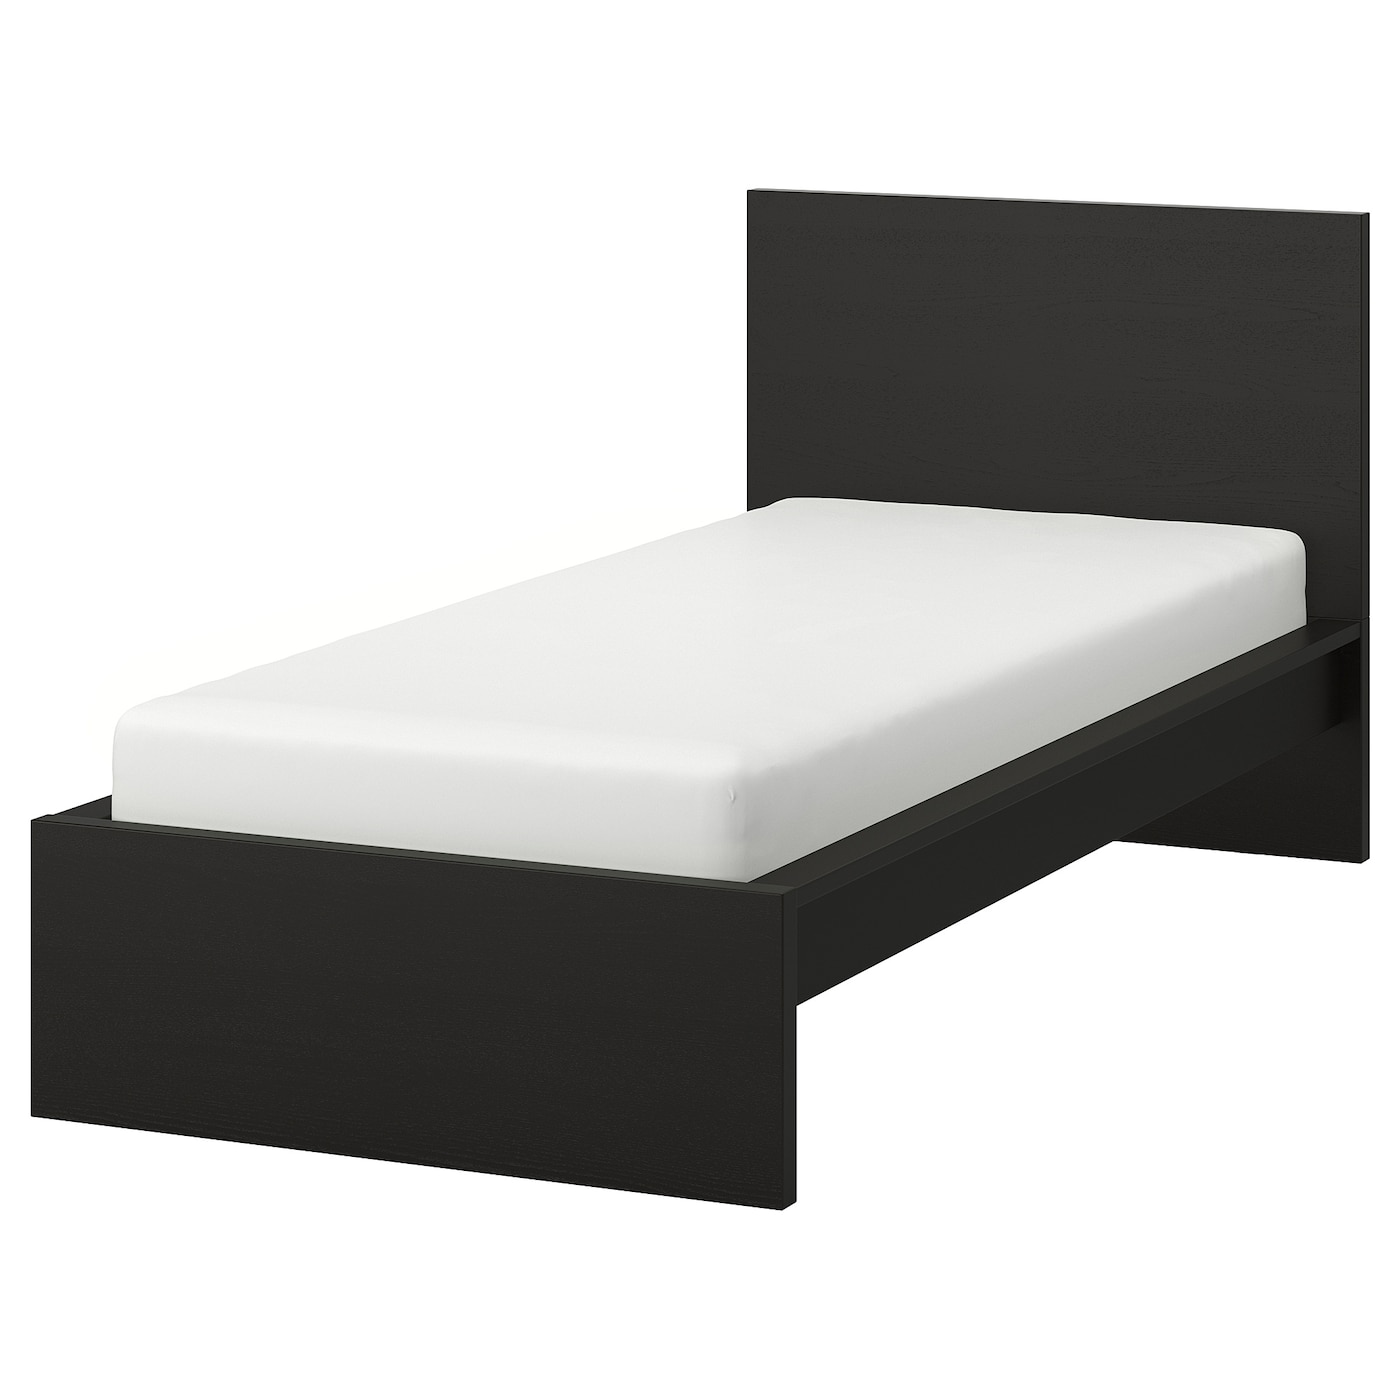 Каркас кровати - IKEA MALM/LÖNSET/LONSET, 200х90 см, черный, МАЛЬМ/ЛОНСЕТ ИКЕА